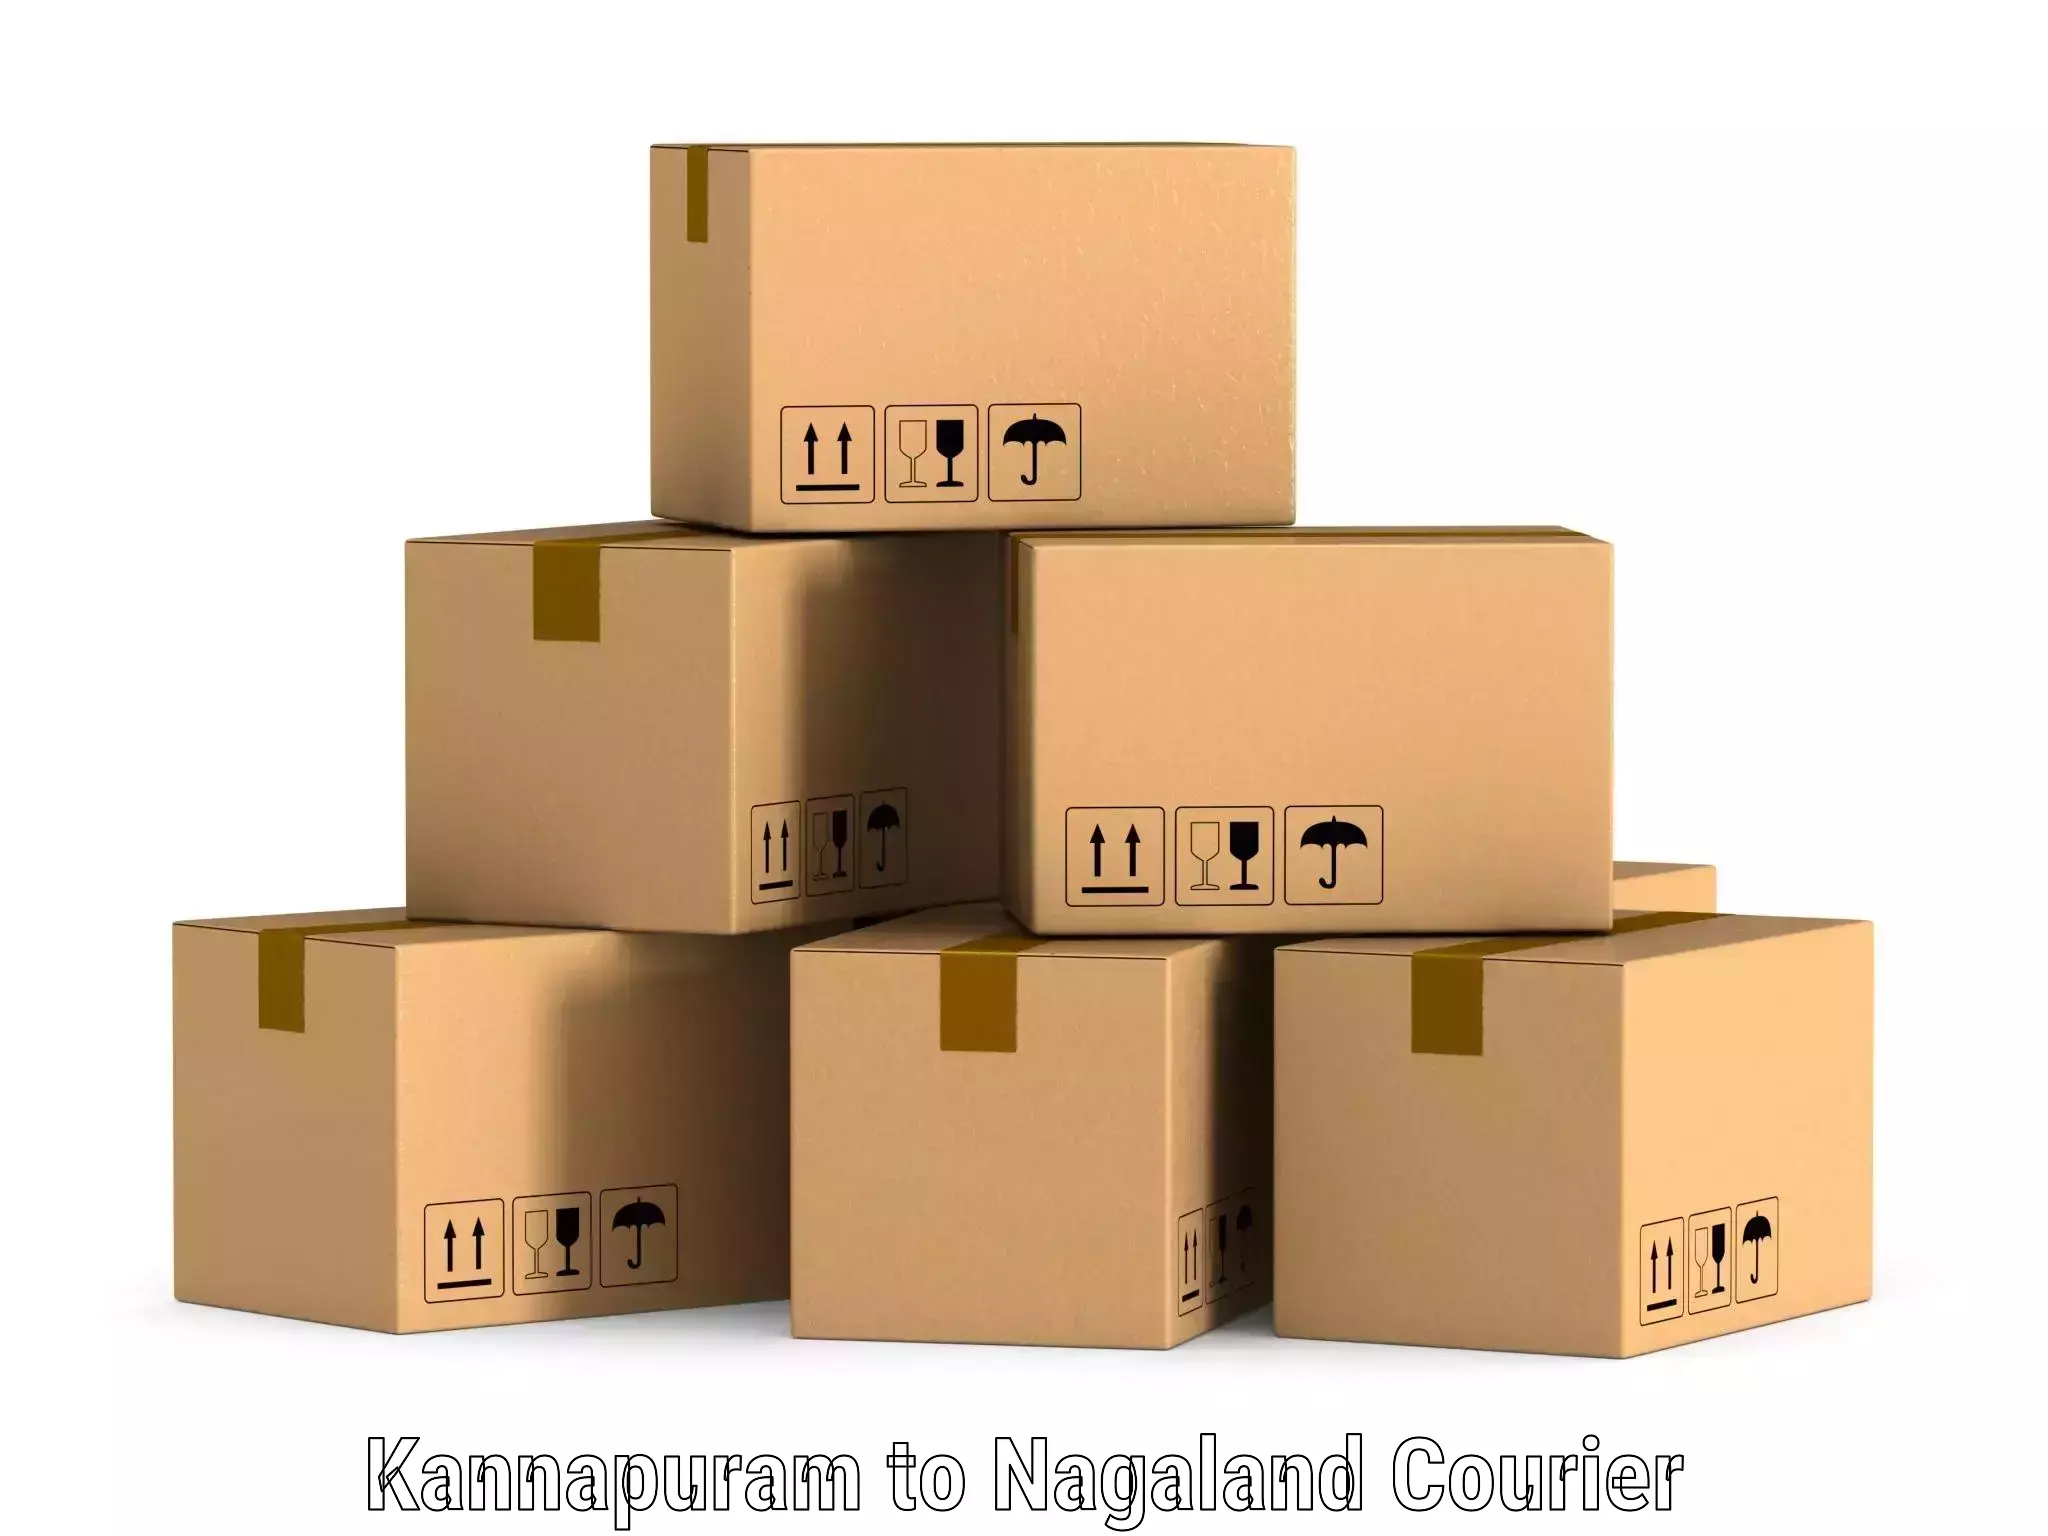 Global shipping networks Kannapuram to Mon